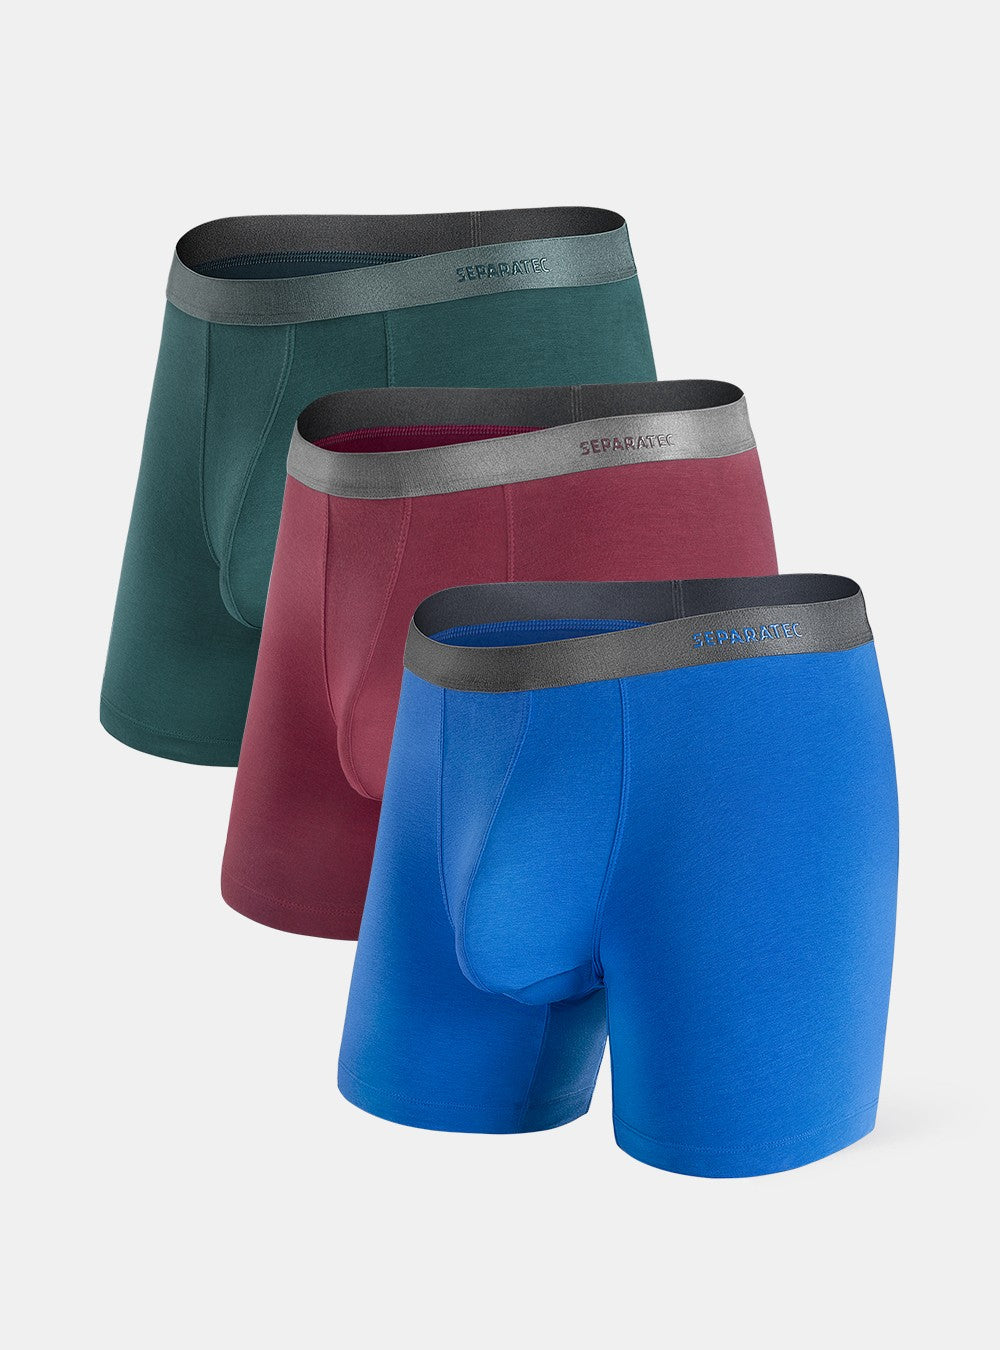 David Archy 4 Packs Trunks Separatec 3D Pouch Micro Modal Dual Pouch Separatec  Underwear